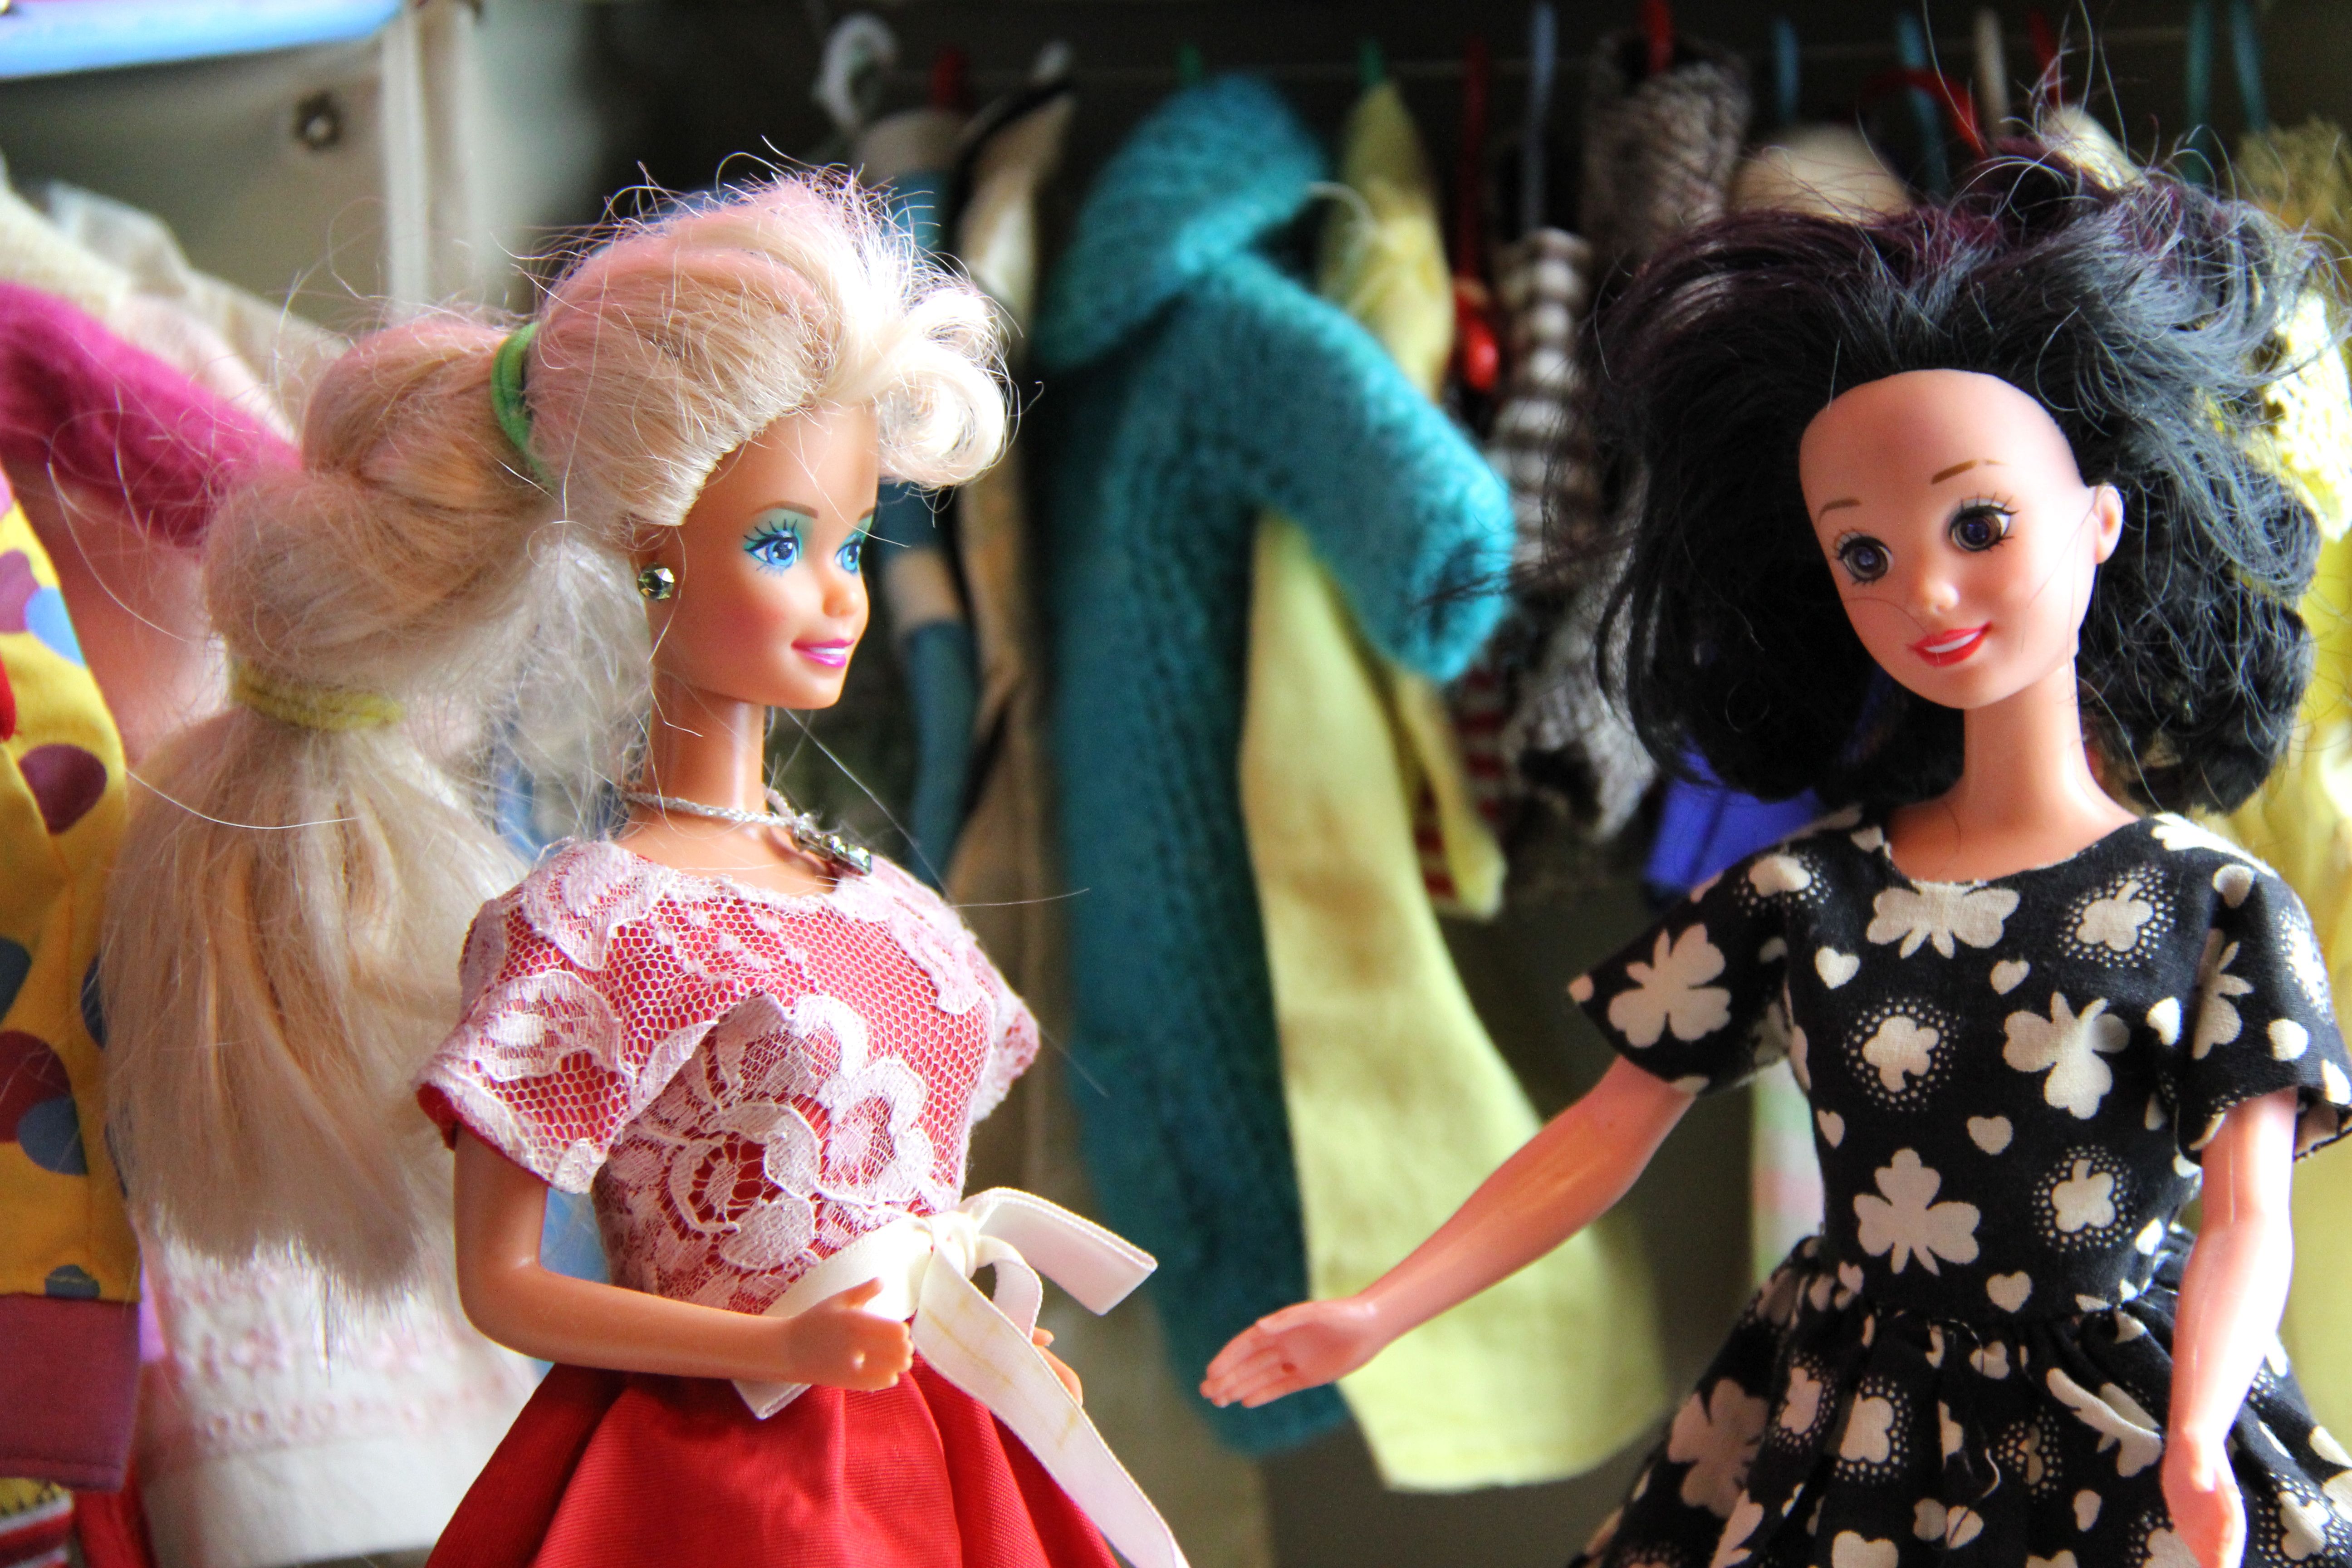 3 Amazing Barbie Doll Bag, Mini Bag, DIY Miniature Purse